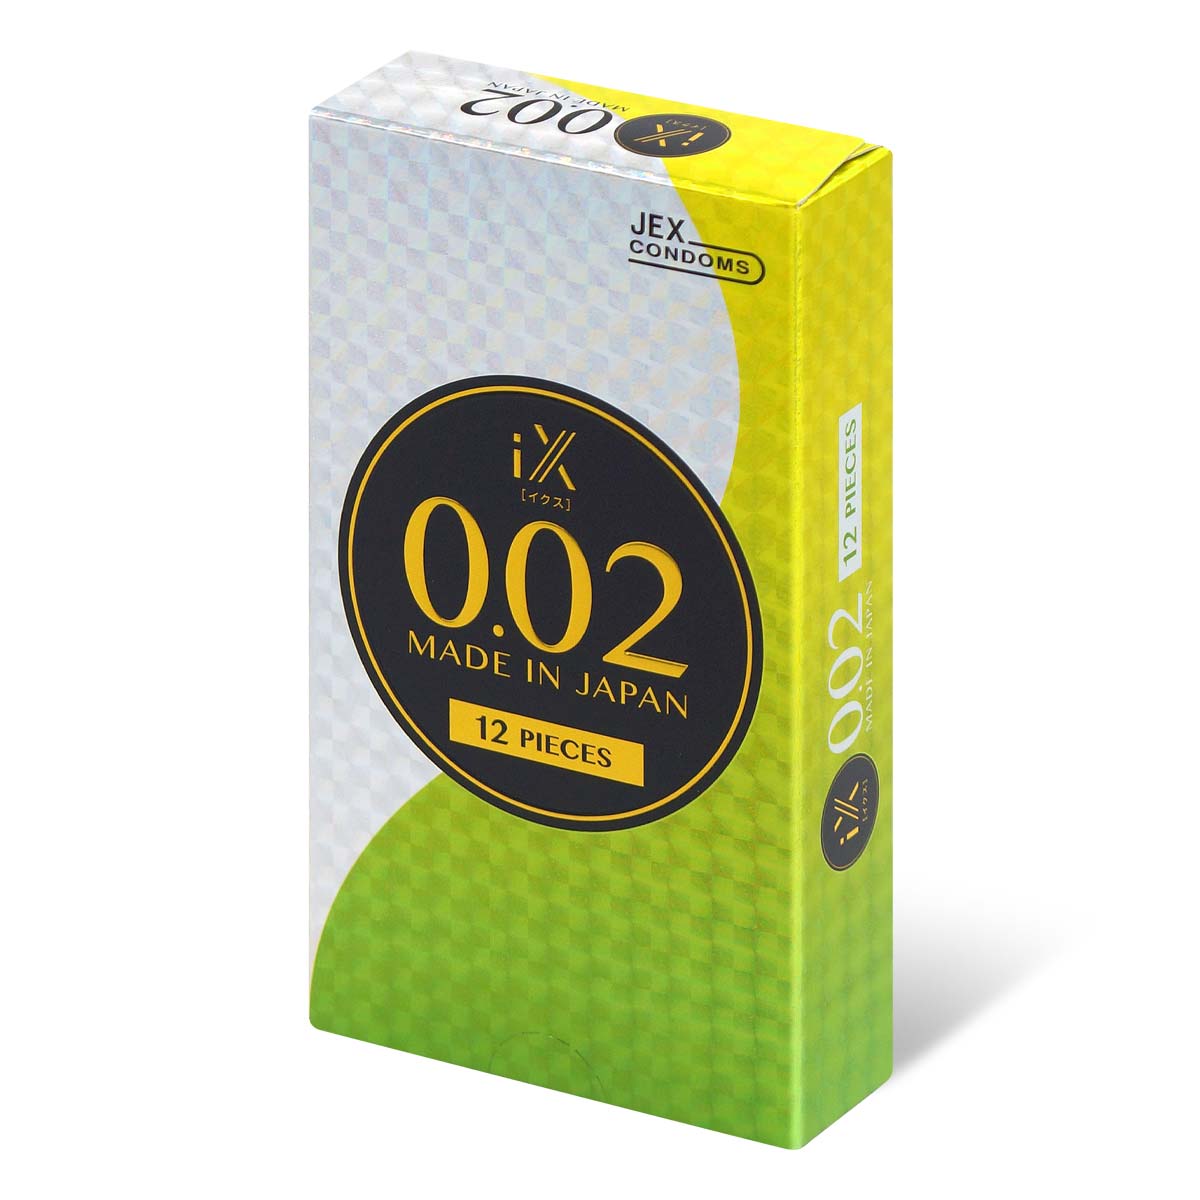 JEX iX 0.02 12's Pack PU Condom-p_1